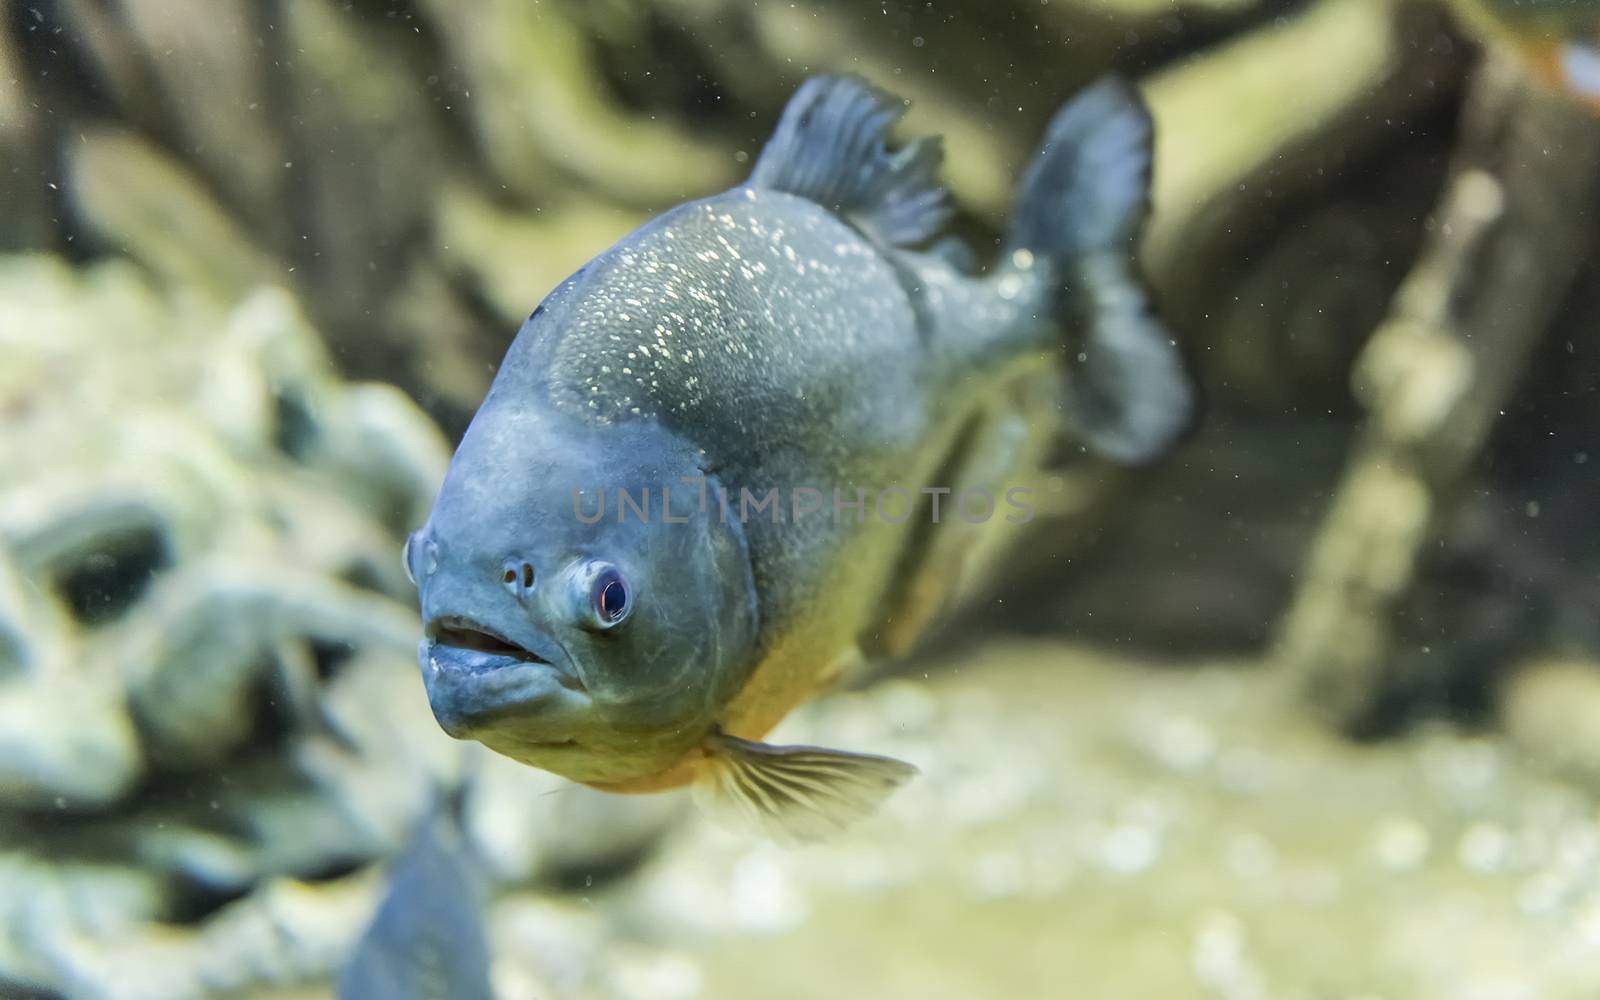 Closeup of a tropical piranha fish underwater in aquarium environment. Aka man-eating piranha